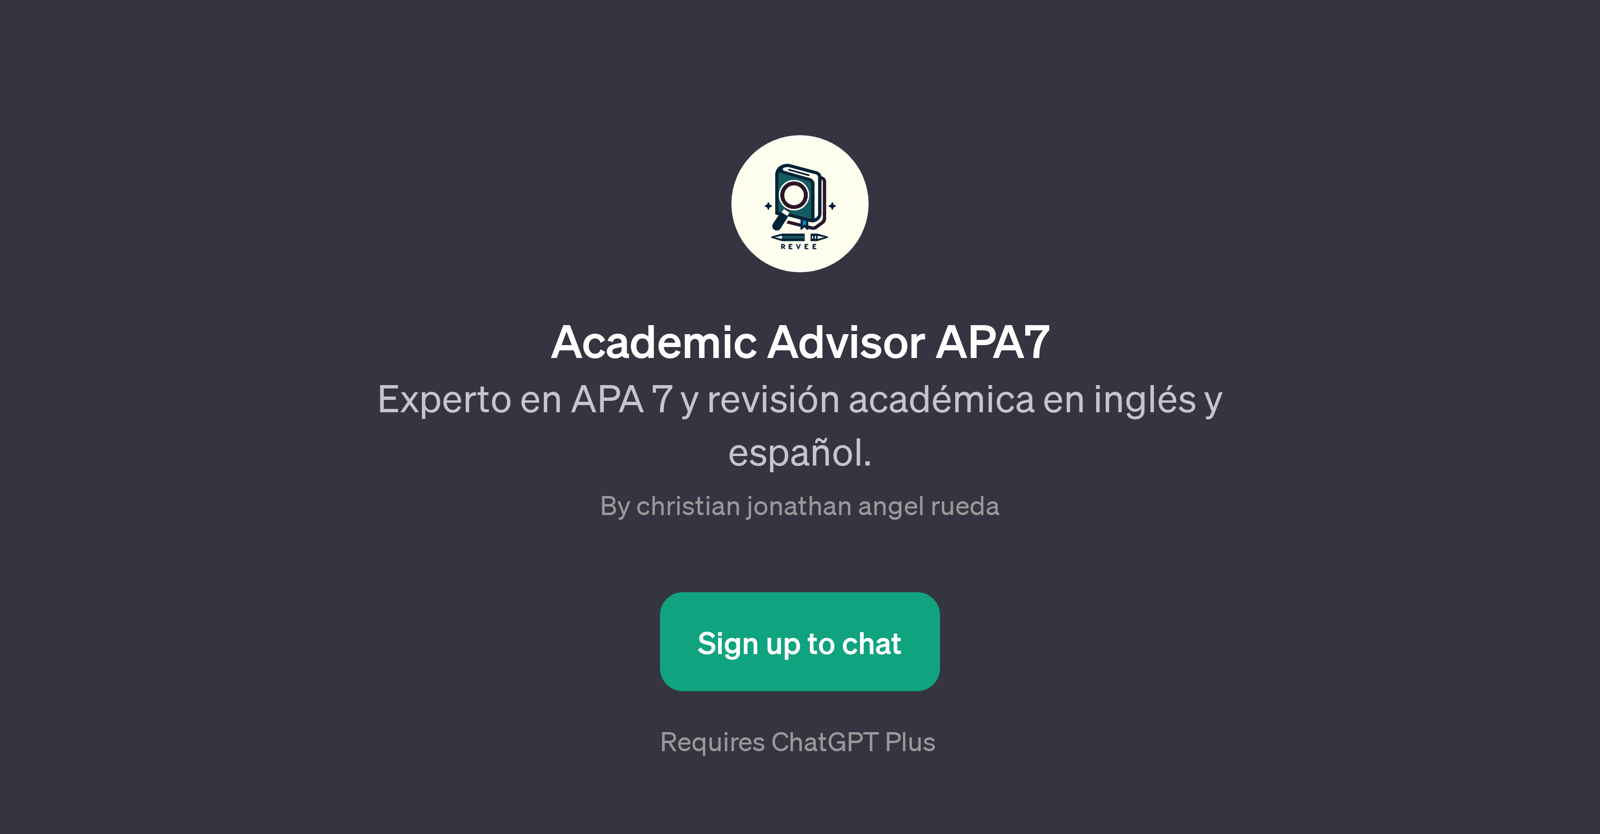 Academic Advisor APA7 website